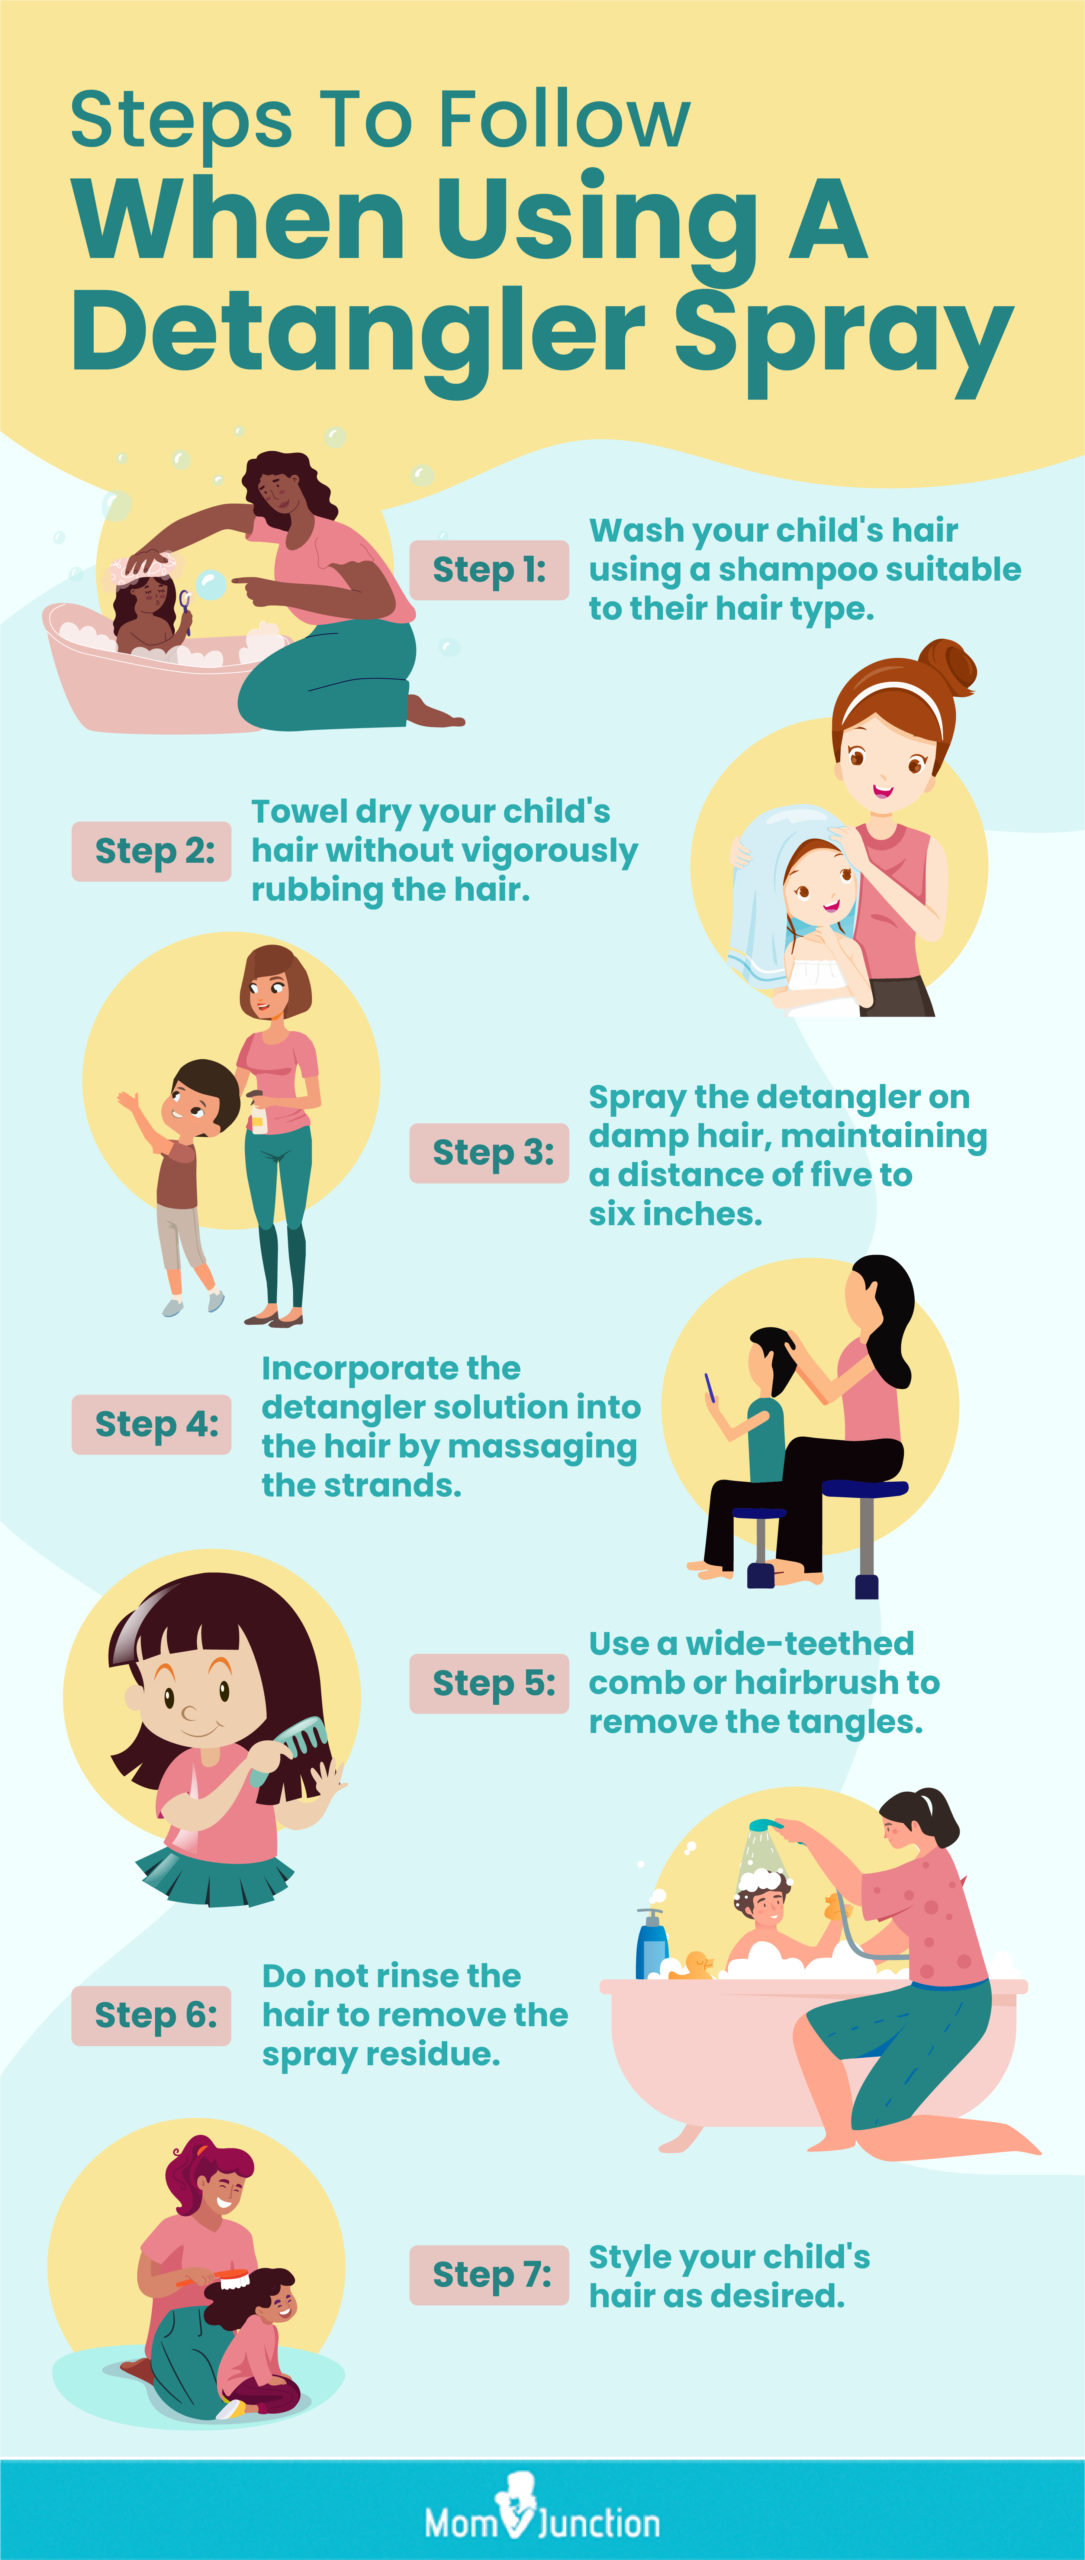 Steps To Follow When Using A Detangler Spray (infographic)